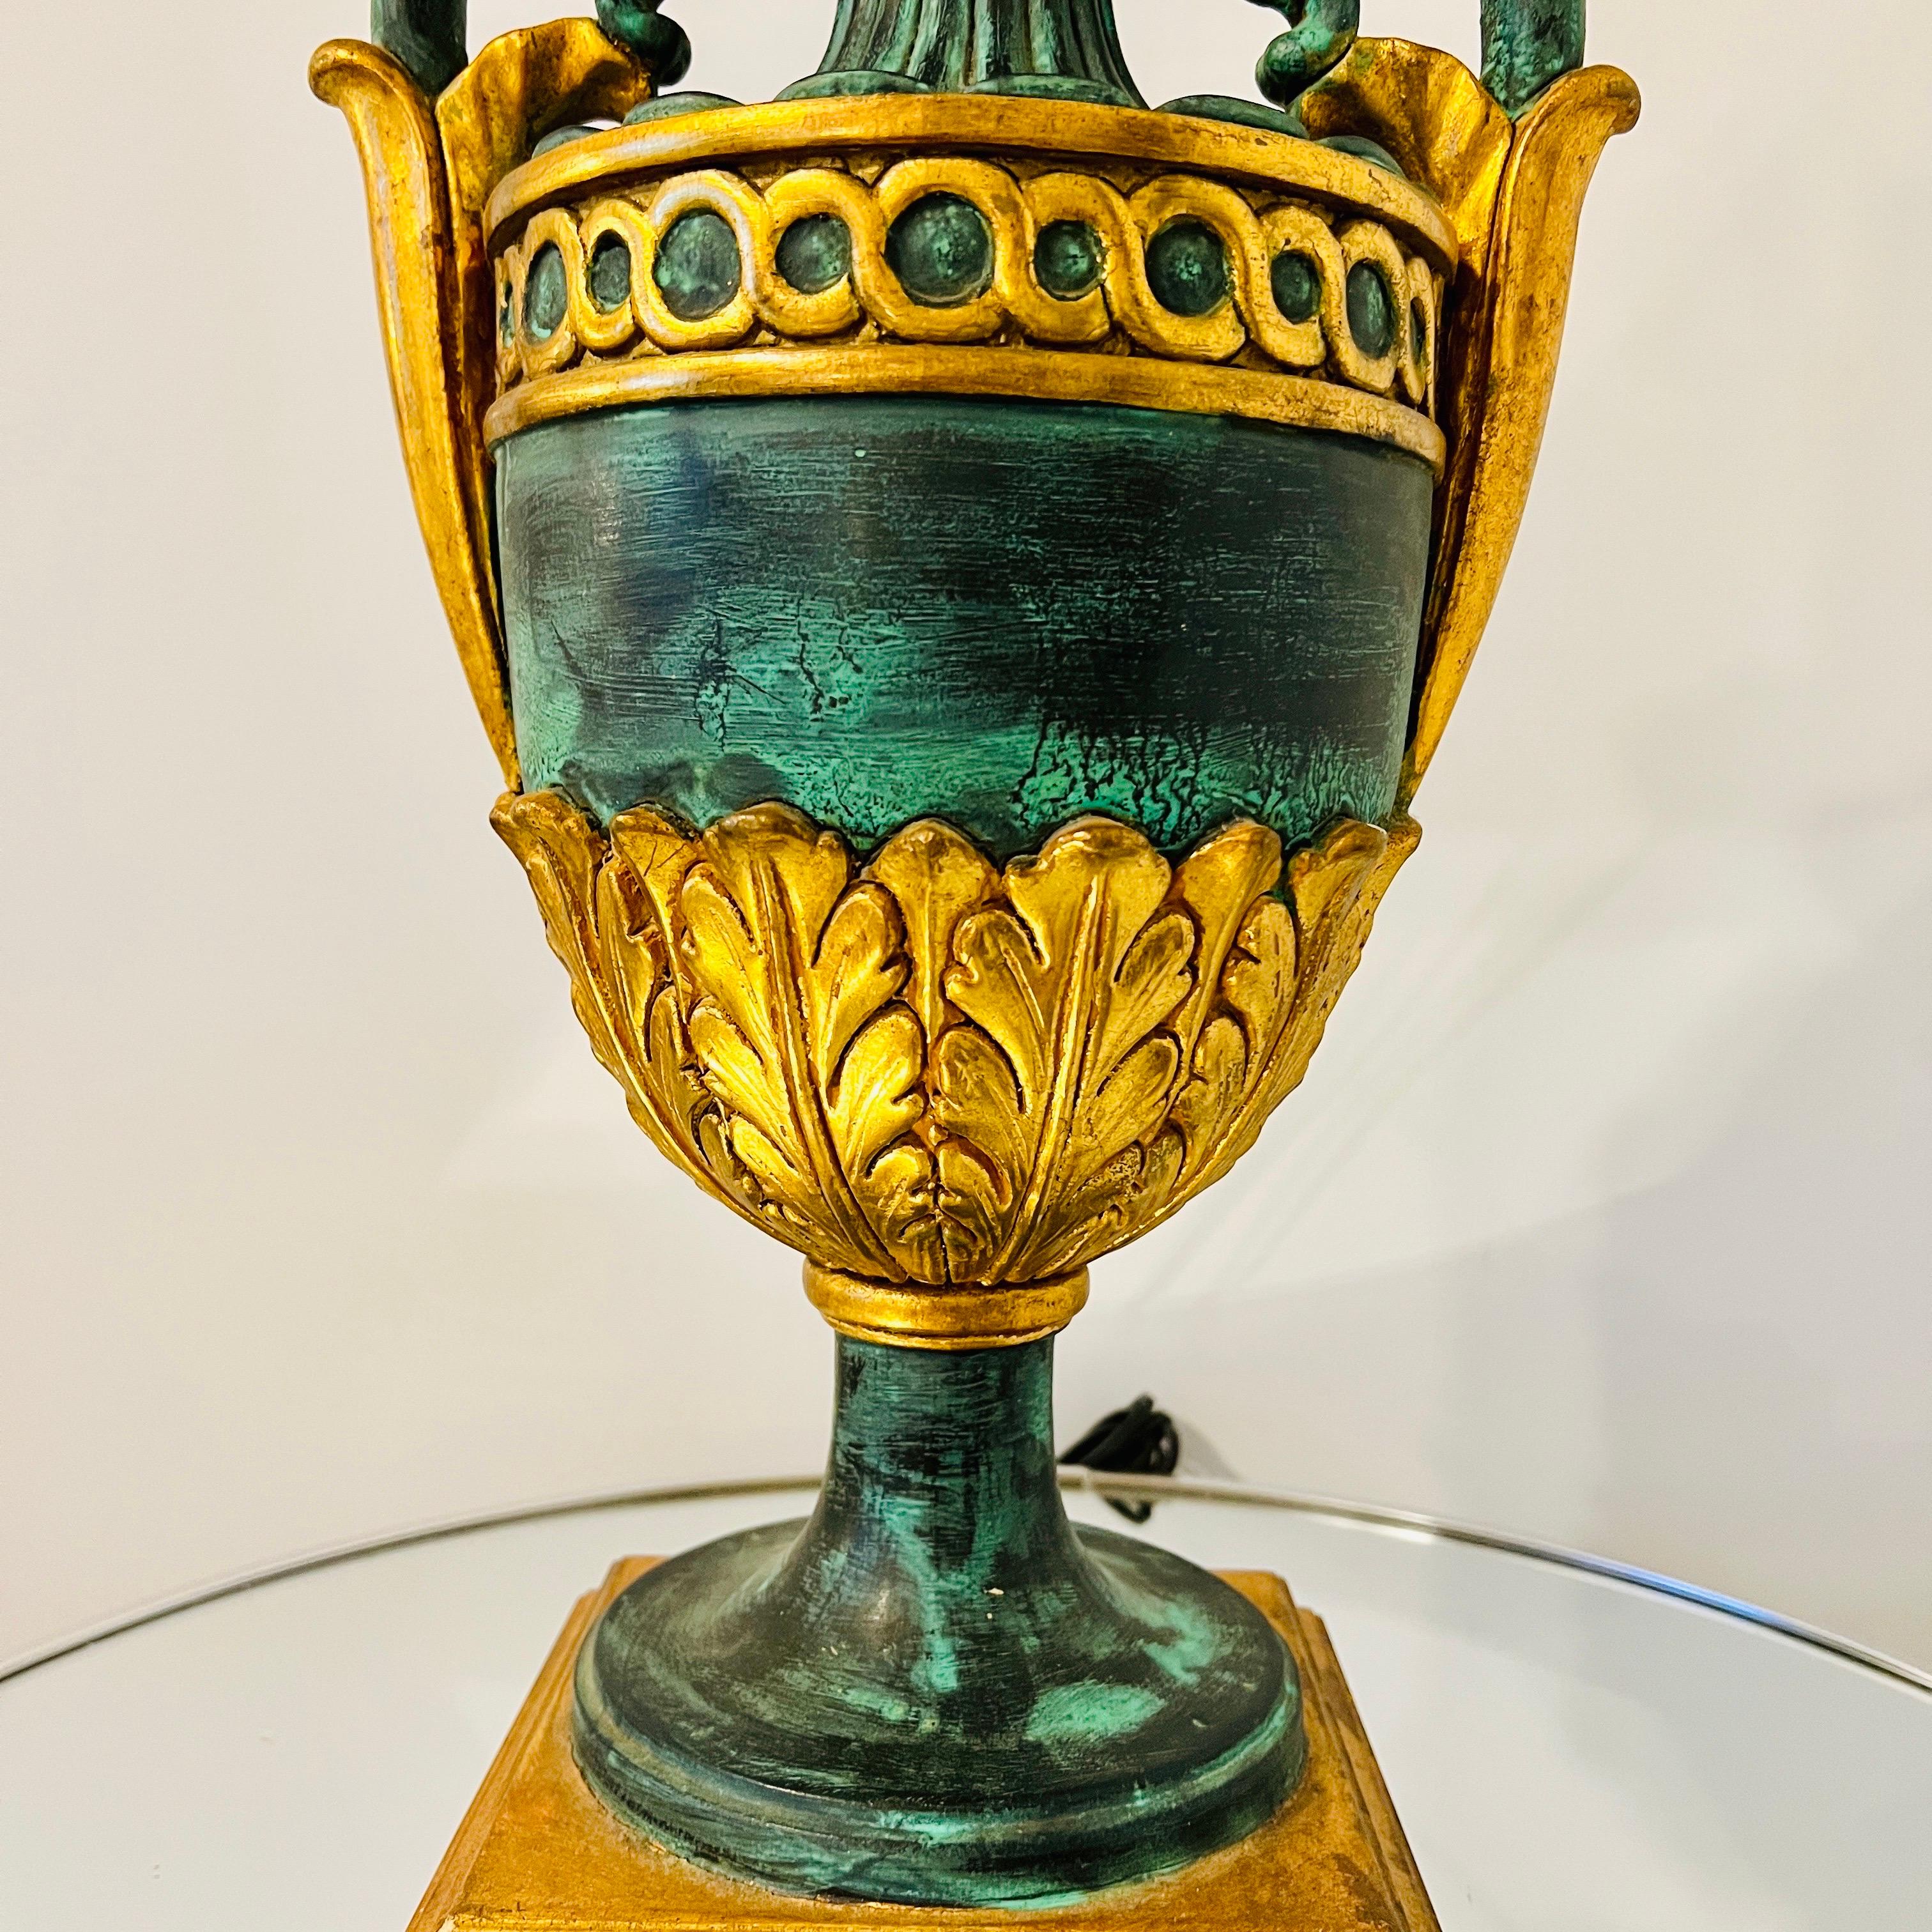 Italian Neoclassical Urn Lamp in Giltwood and Painted Verdigris, Italy, c. 1970's